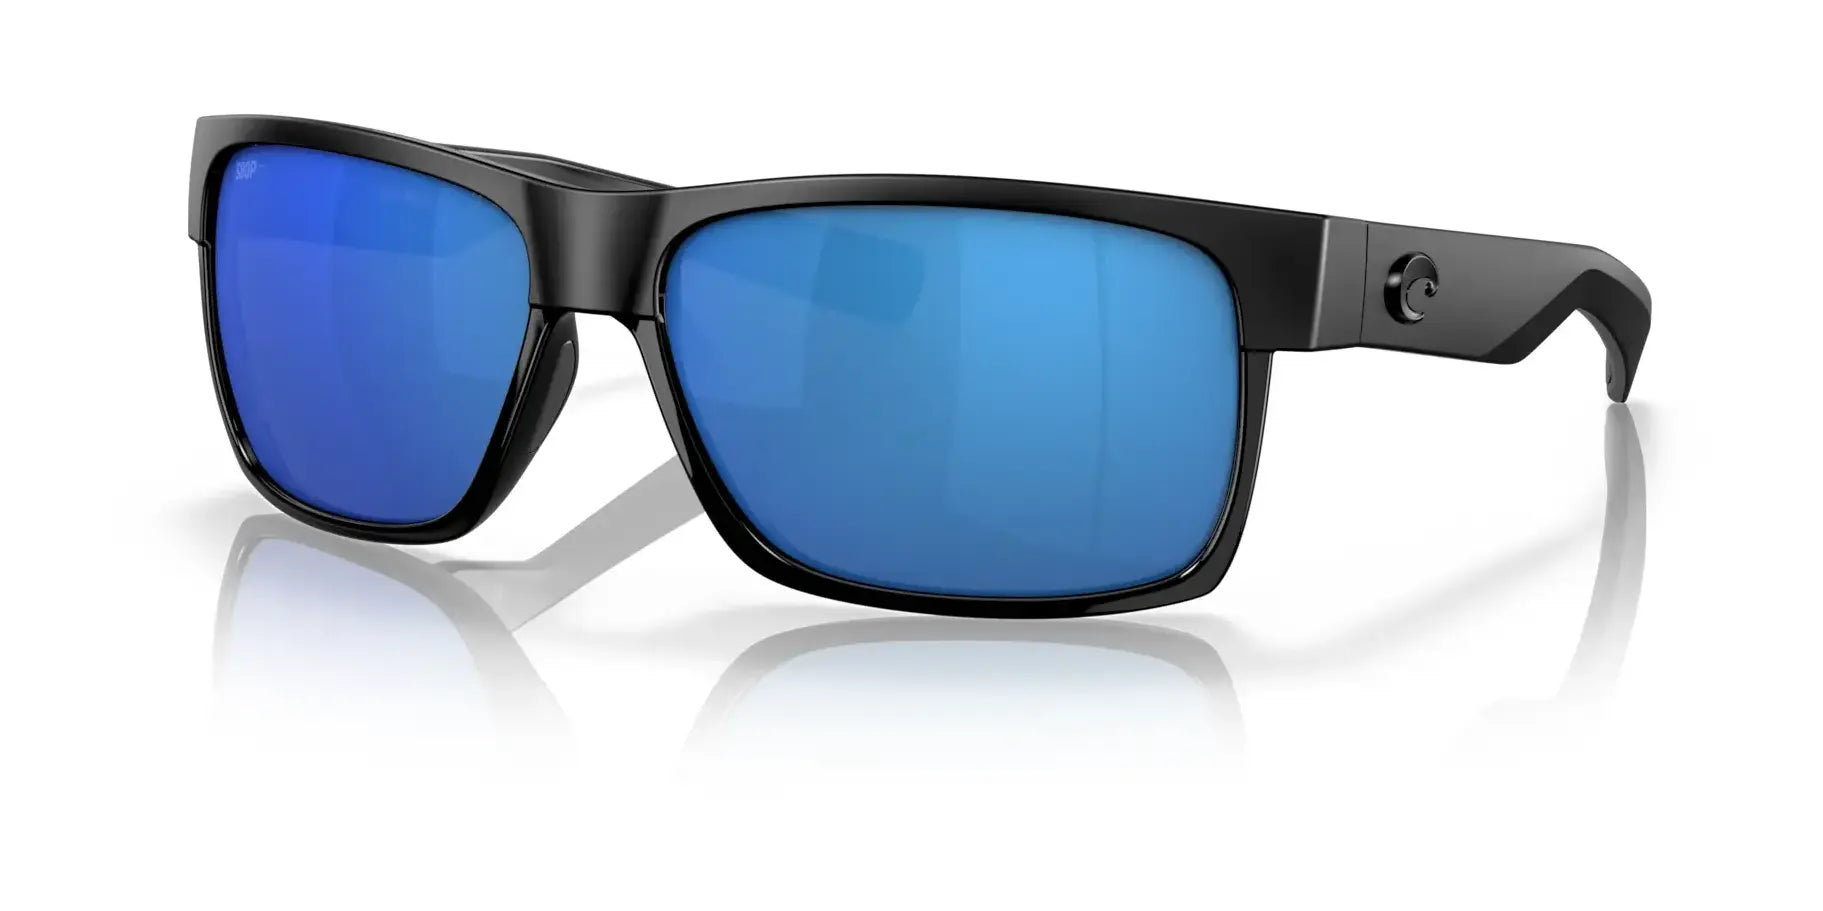 Costa HALF MOON 6S9026 Sunglasses Shiny Black / Blue Mirror